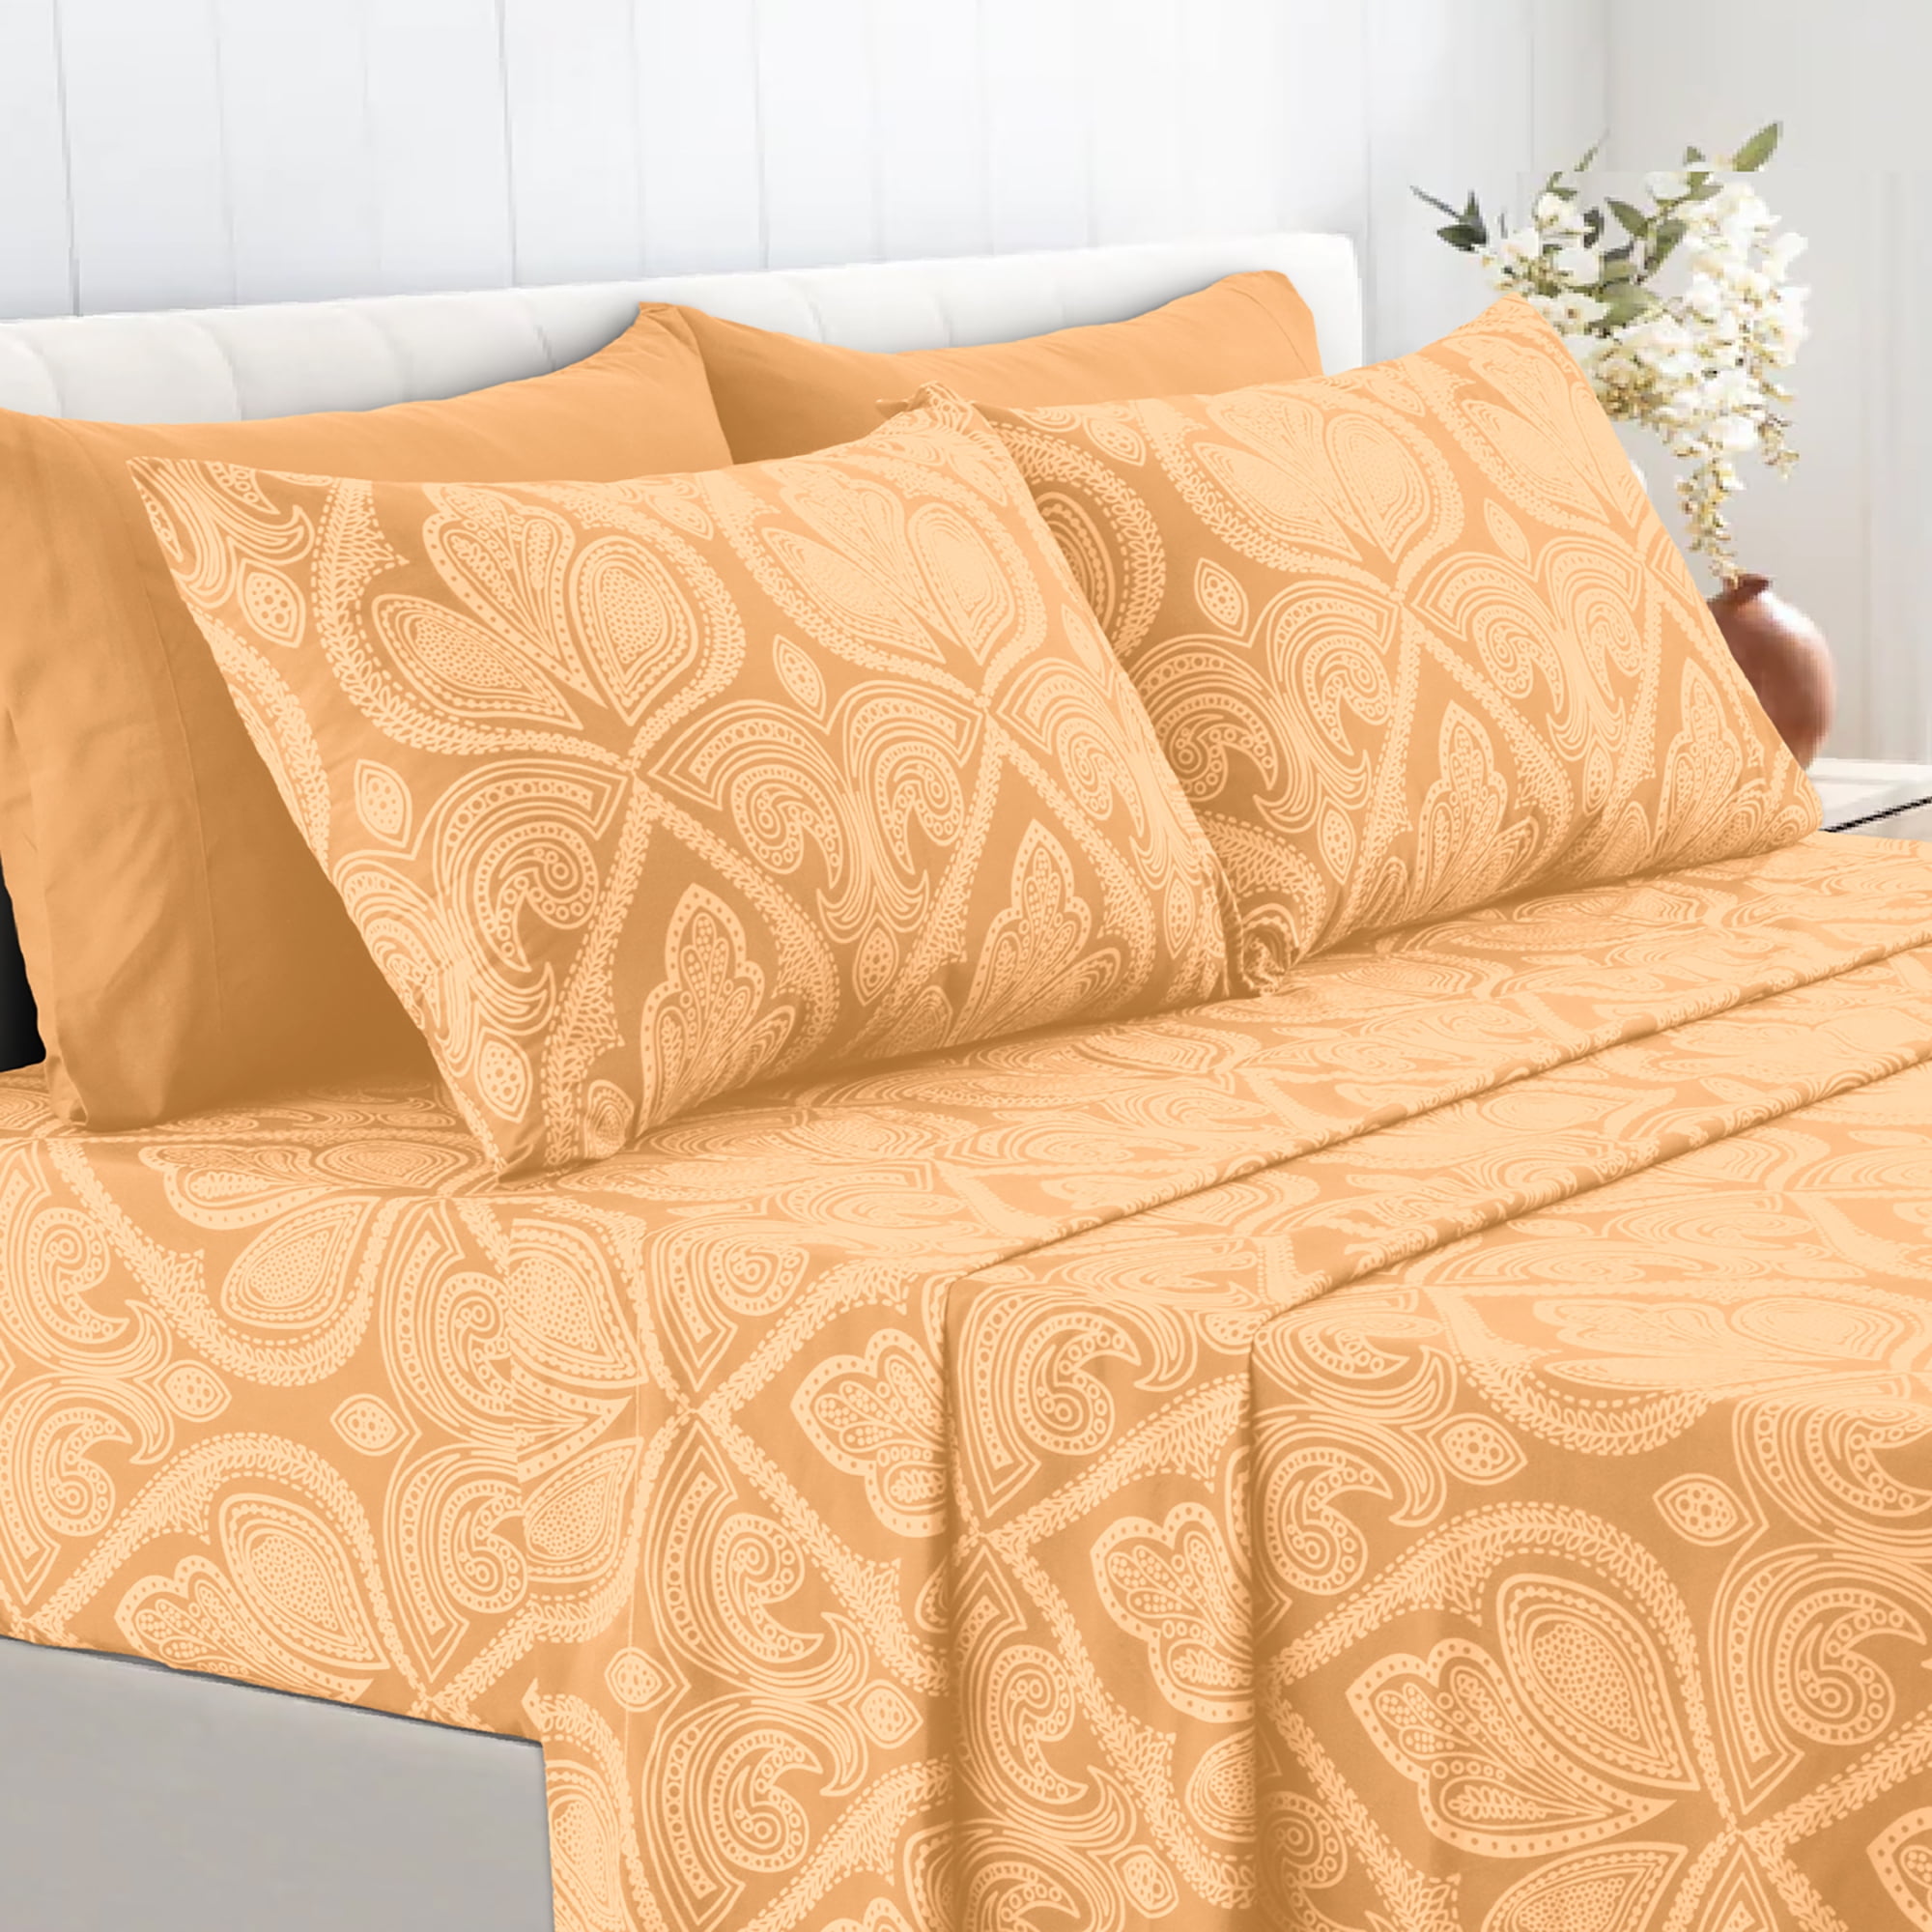 Details about   Unique 4 PCs Water Bed Sheet Set 1000tc Egyptian Cotton Cal King Size All Stripe 